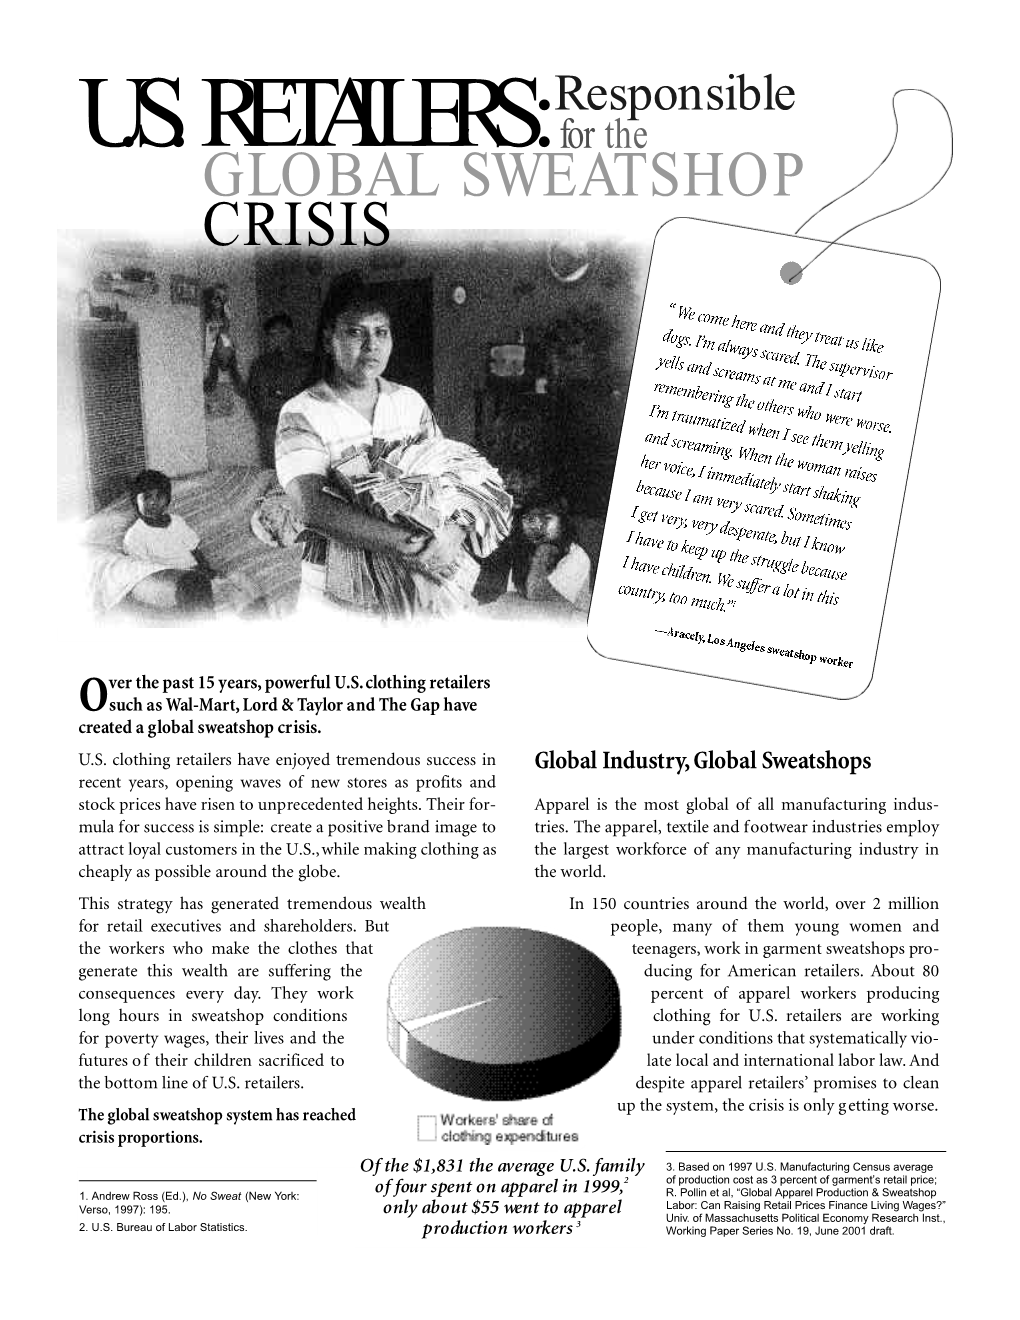 U.S. Retailers: Responsible for the Global Sweatshop Crisis